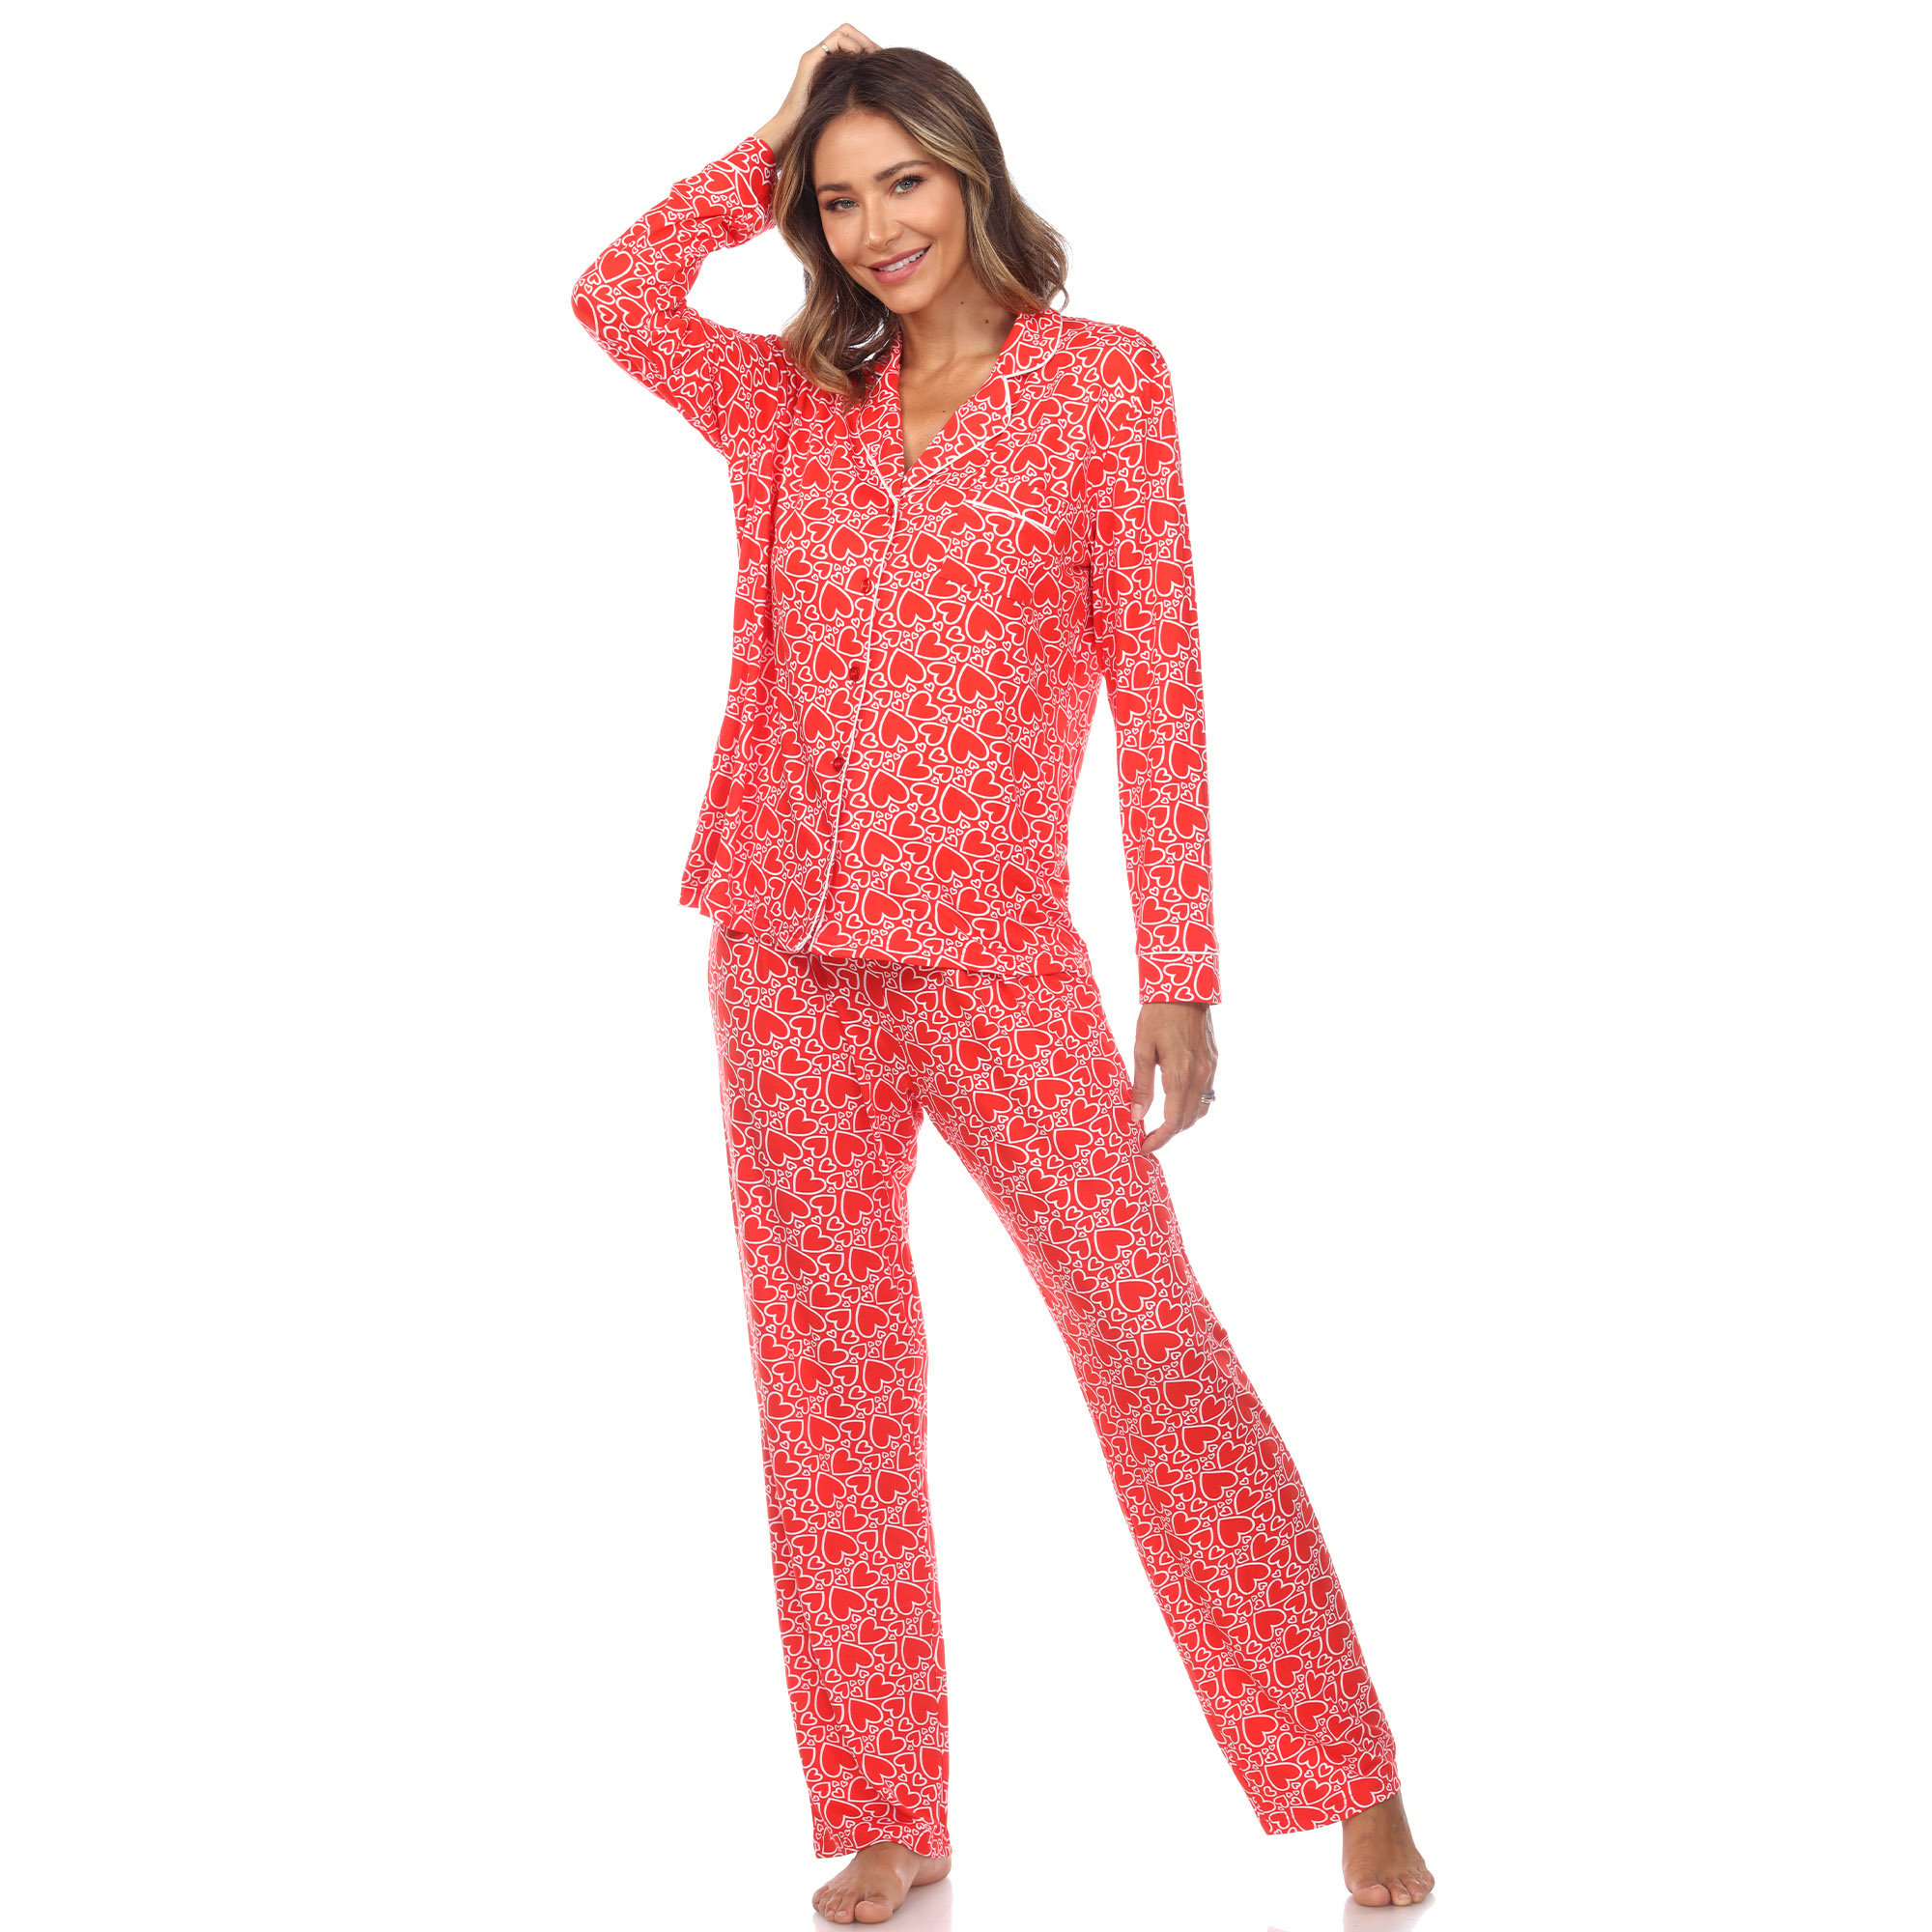 White Mark Women's Long Sleeve Hearts Pajama Set - Red, 1X